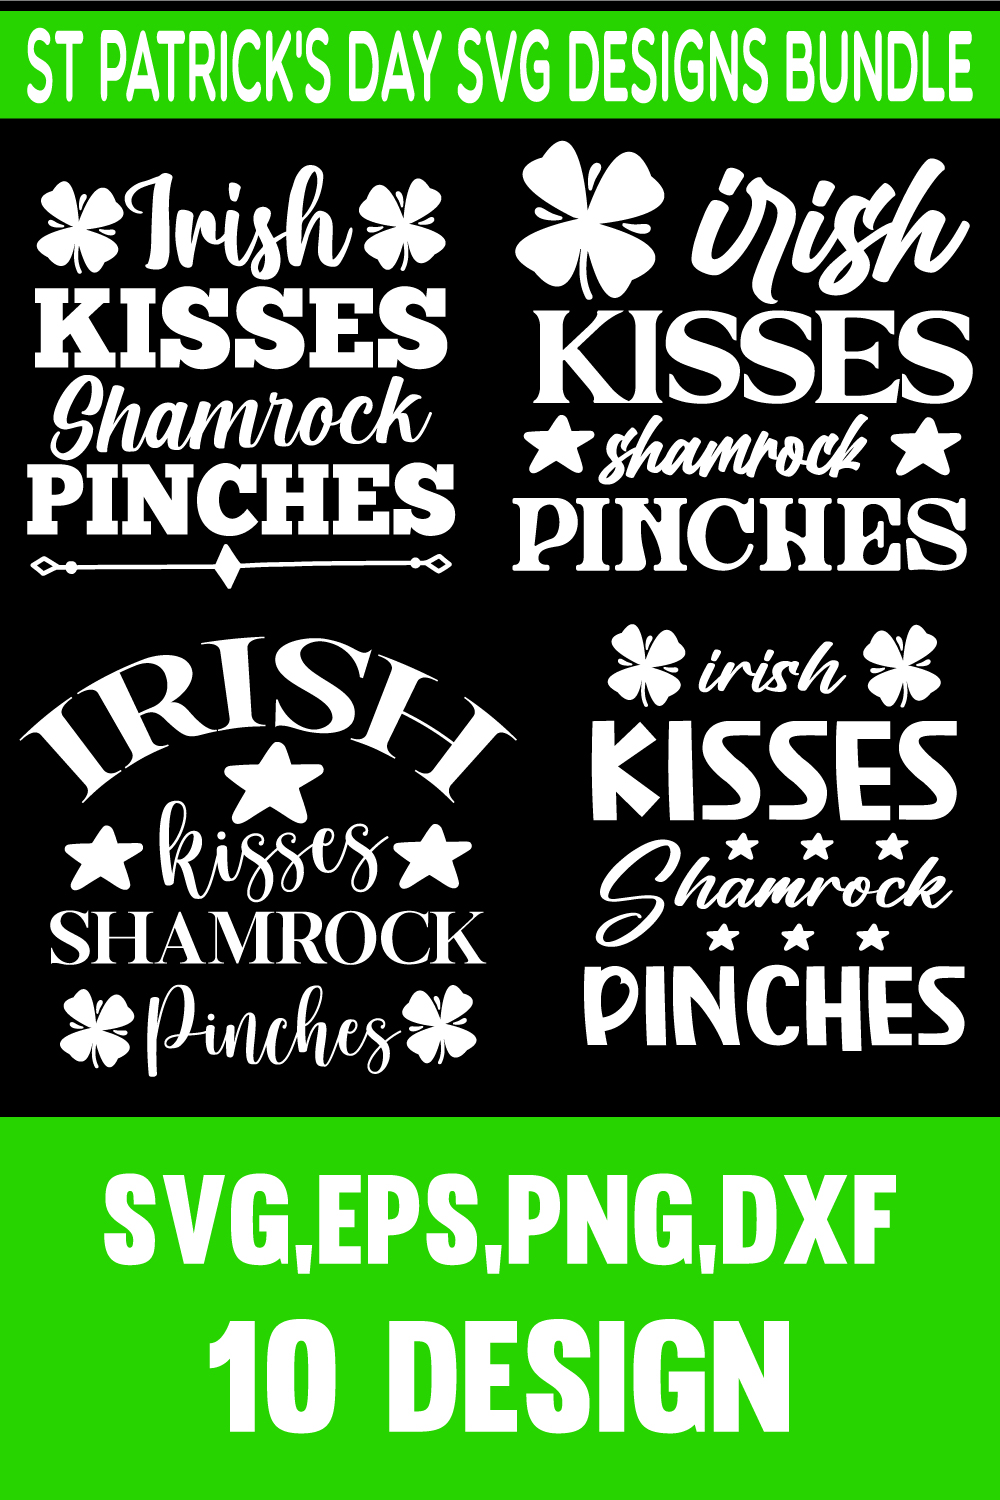 10 St Patrick\'s day SVG bundle pinterest preview image.